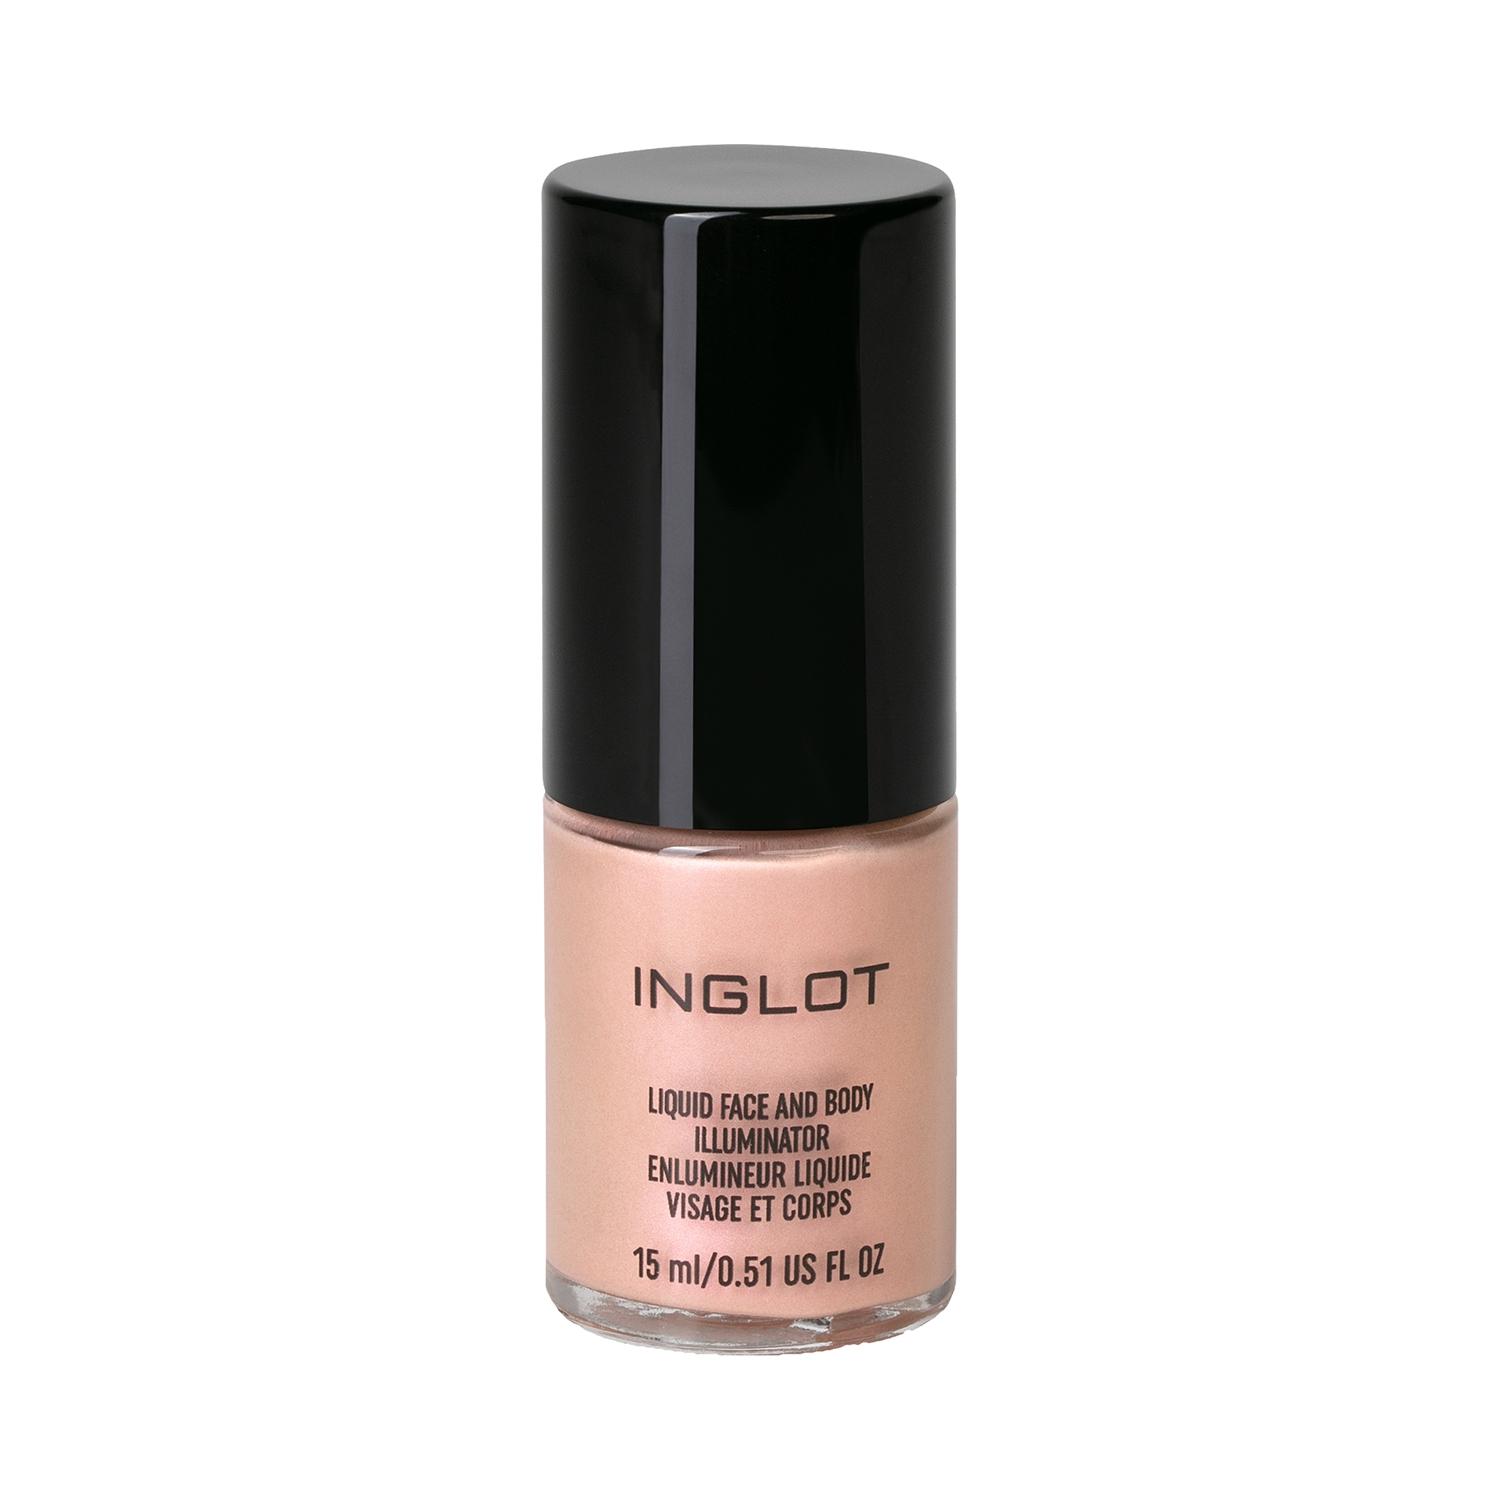 inglot liquid face & body illuminator - 63 shade (15ml)